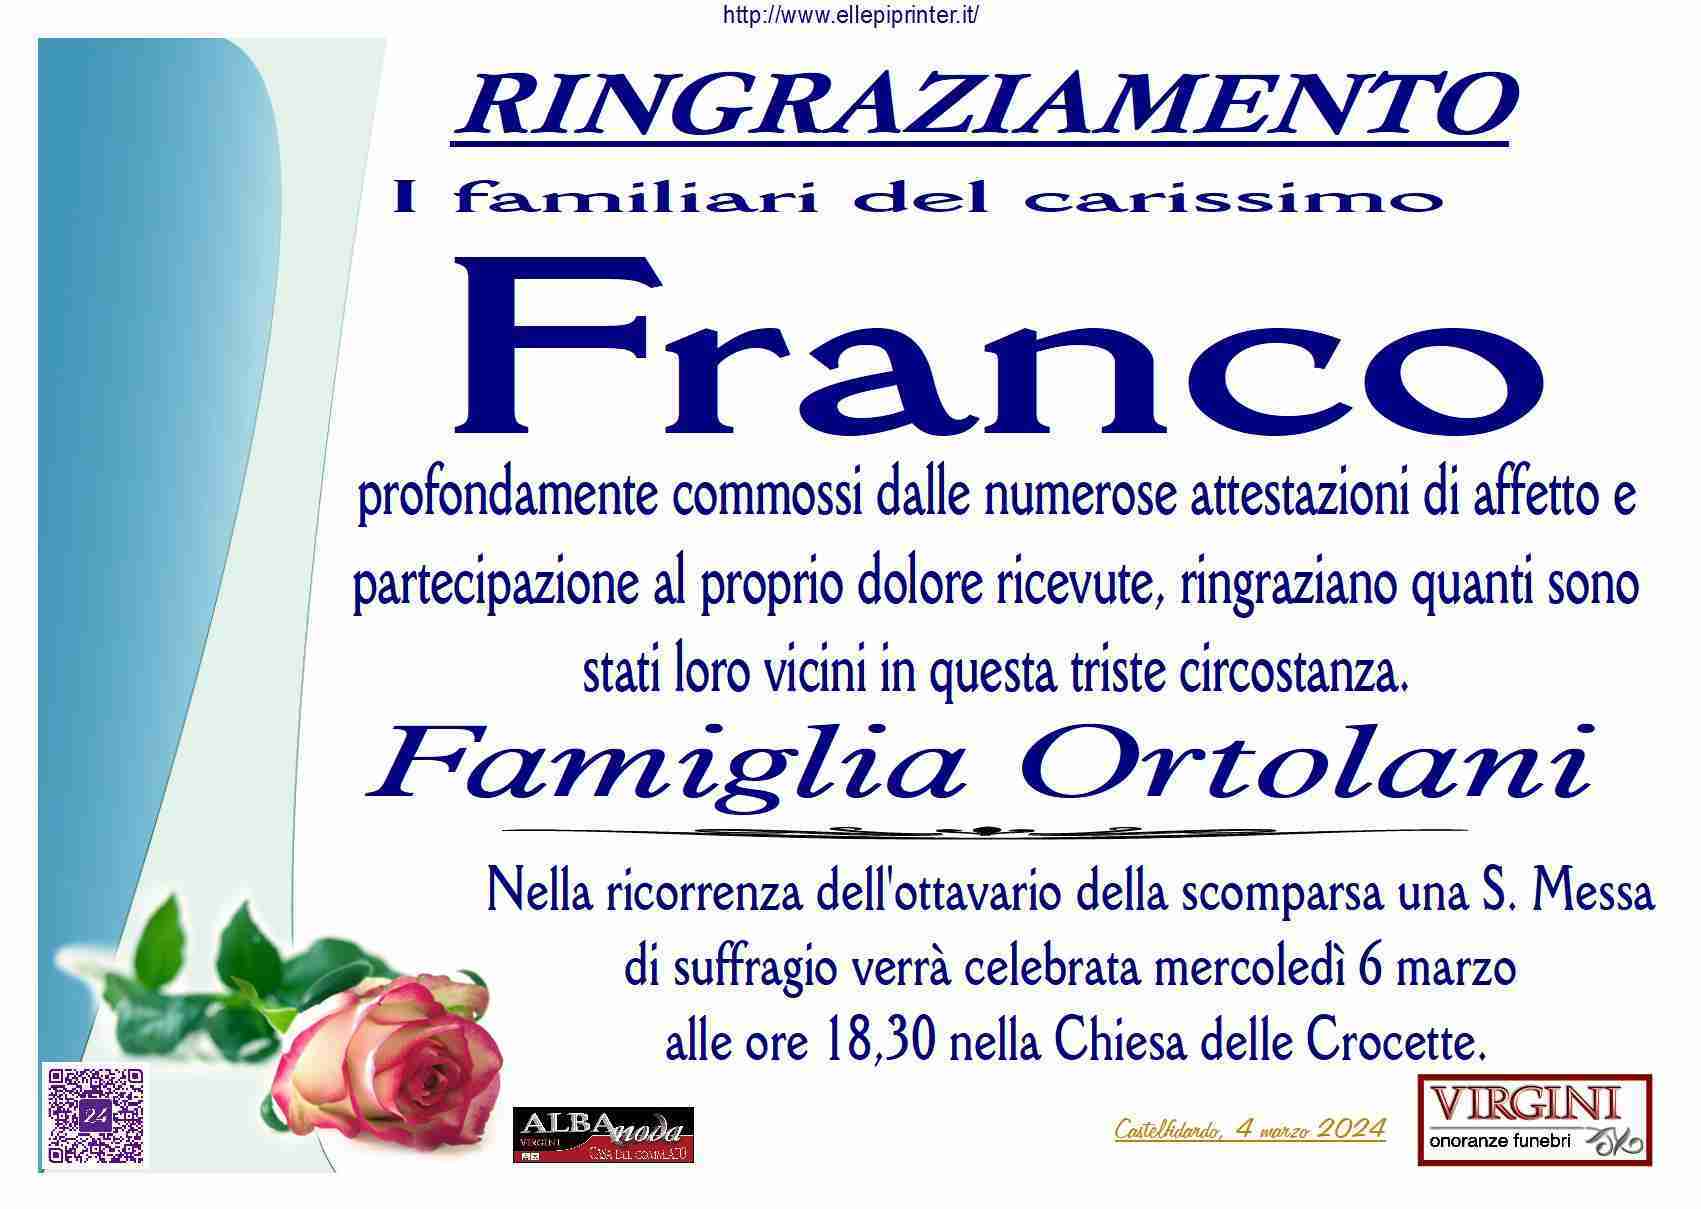 Franco Ortolani